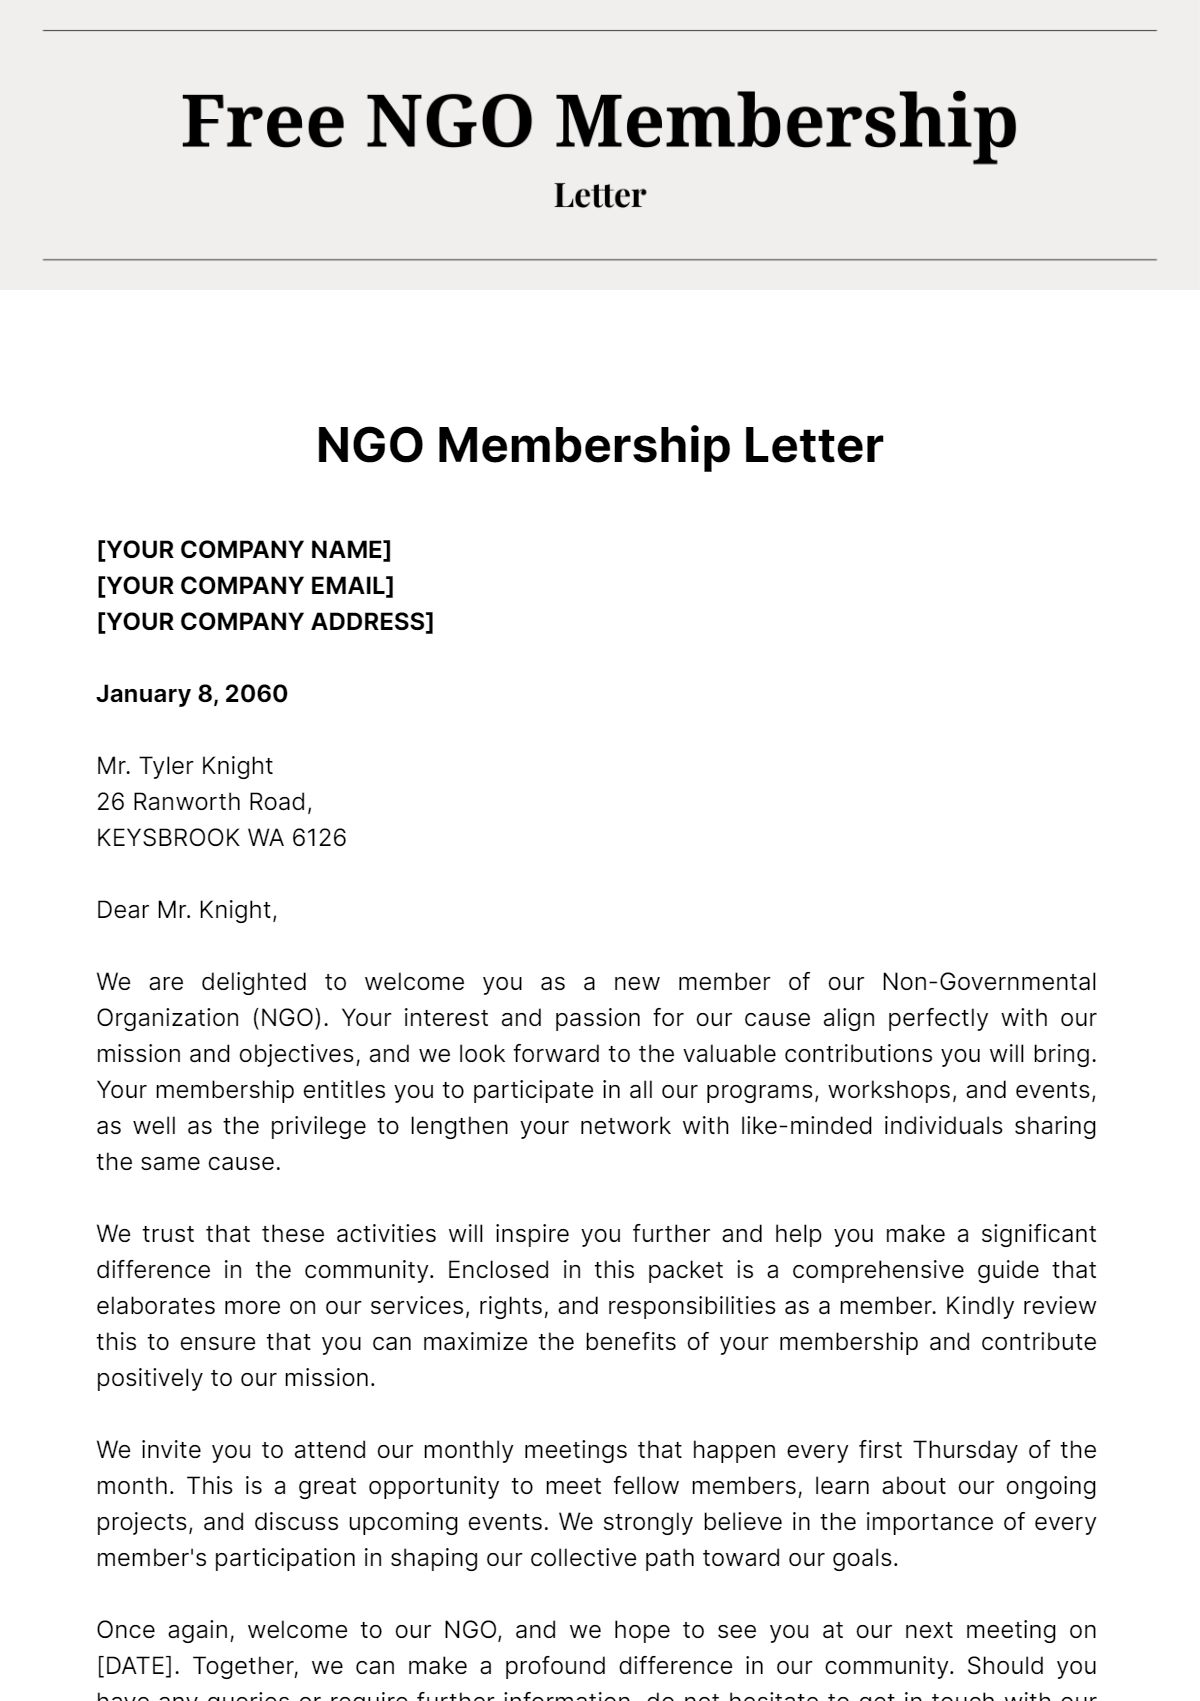 Free NGO Membership Letter Template